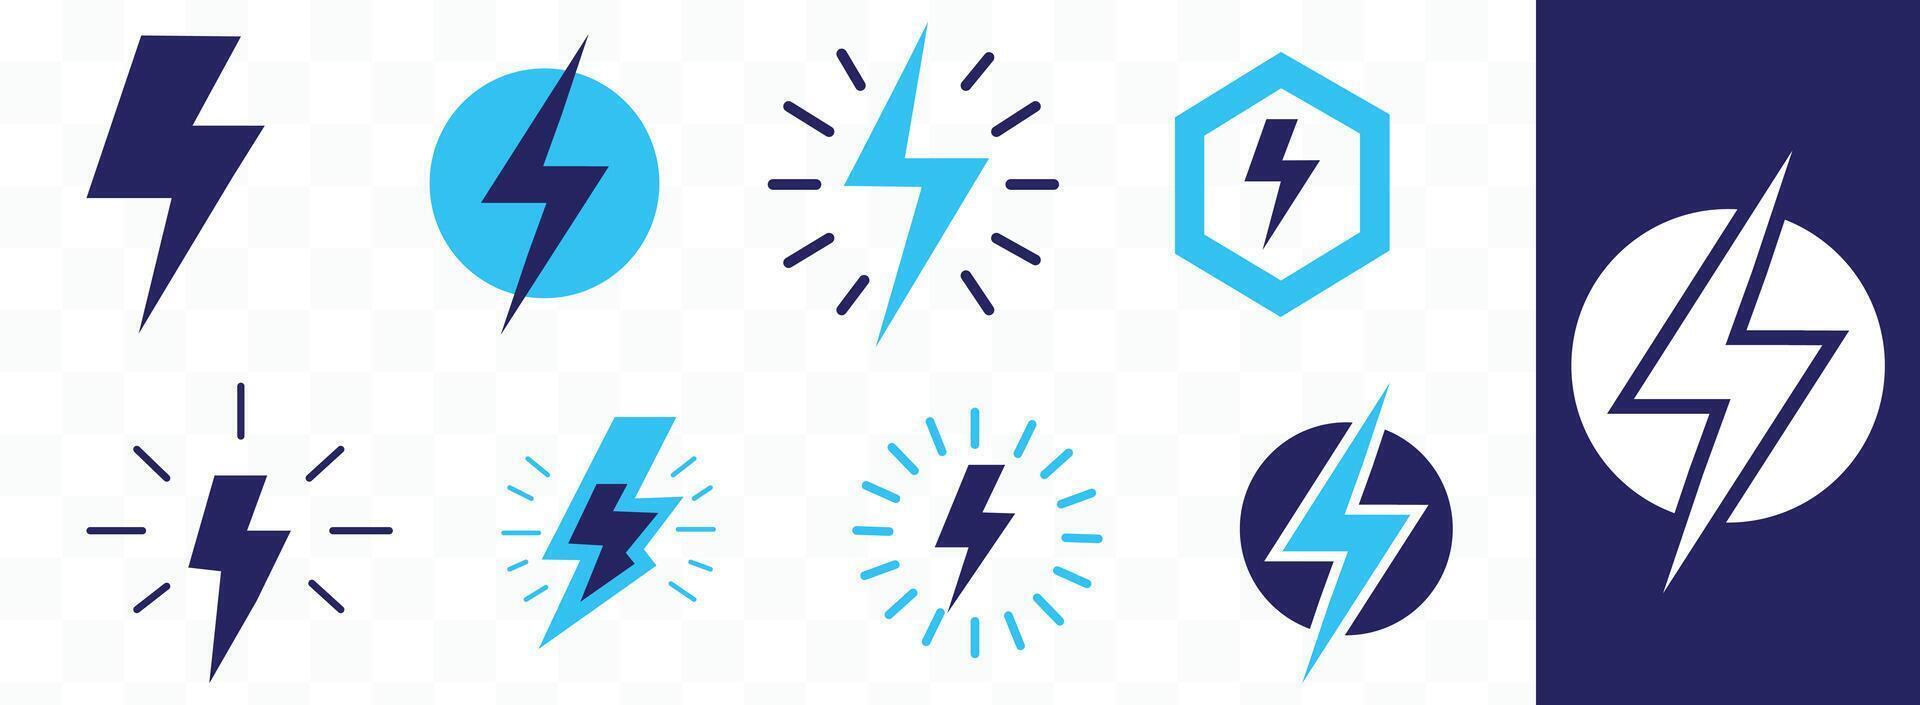 Lightning bolt icon set. Flash electric symbol. Thunderbolt flat style sign, vector illustration.